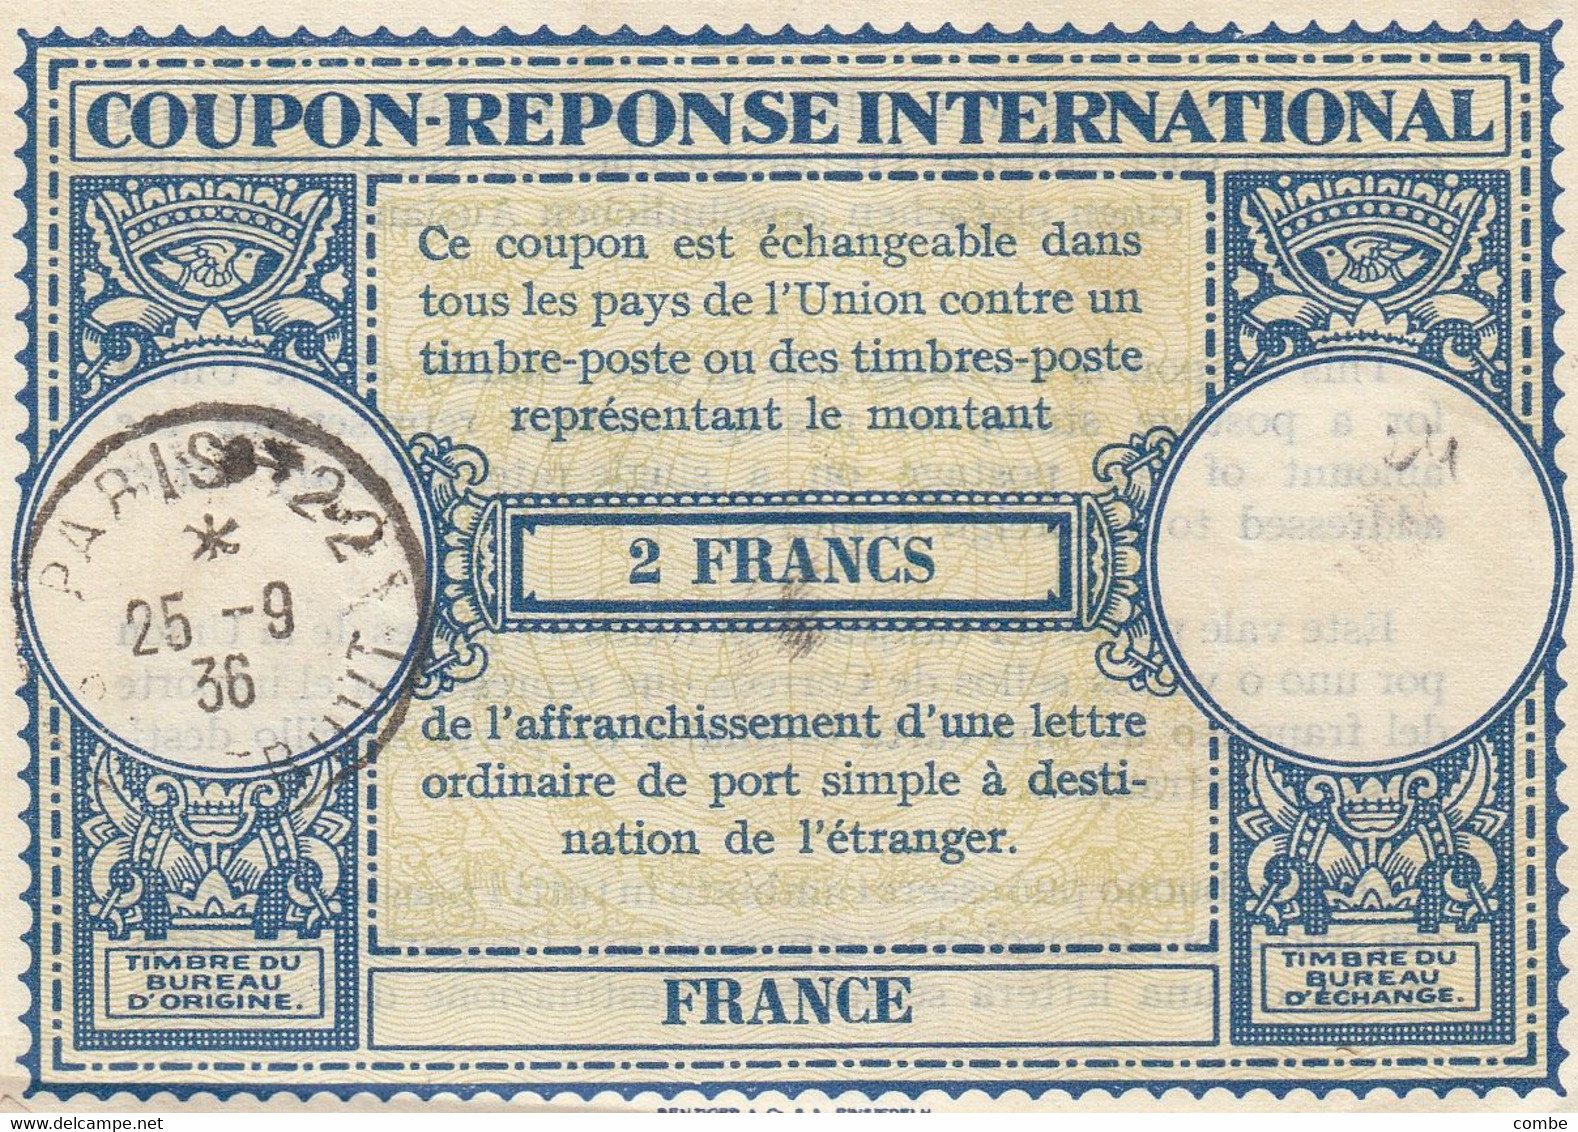 COUPON-REPONSE INTERNATIONAL. FRANCE. INTERNATIONAL REPLY. 2 FRANCS. PARIS 22 1936        /  2 - Cupón-respuesta